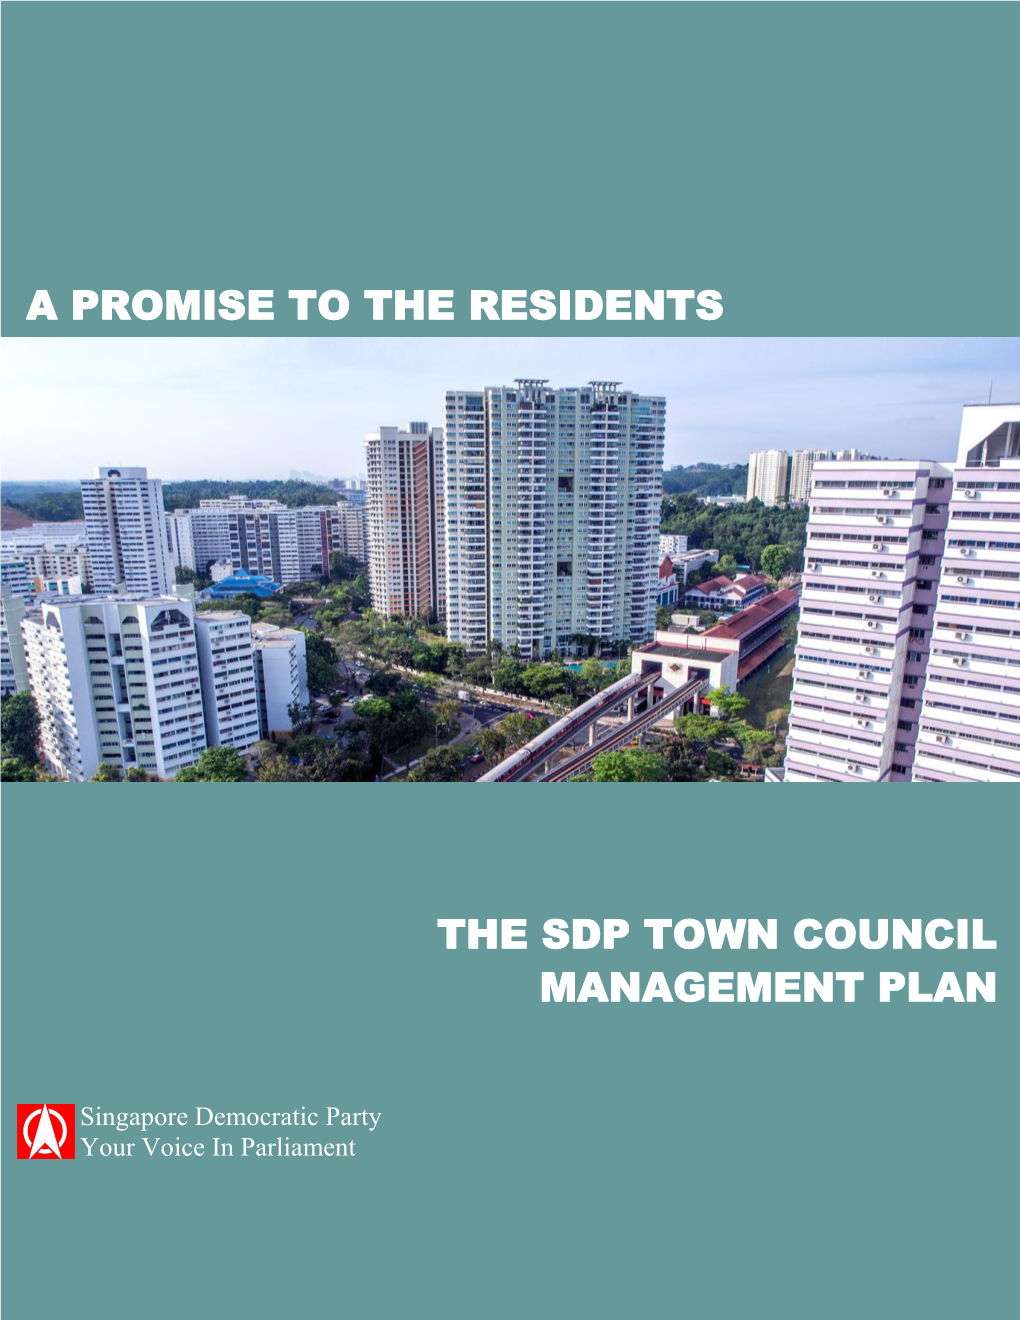 The SDP Town Council Management Plan